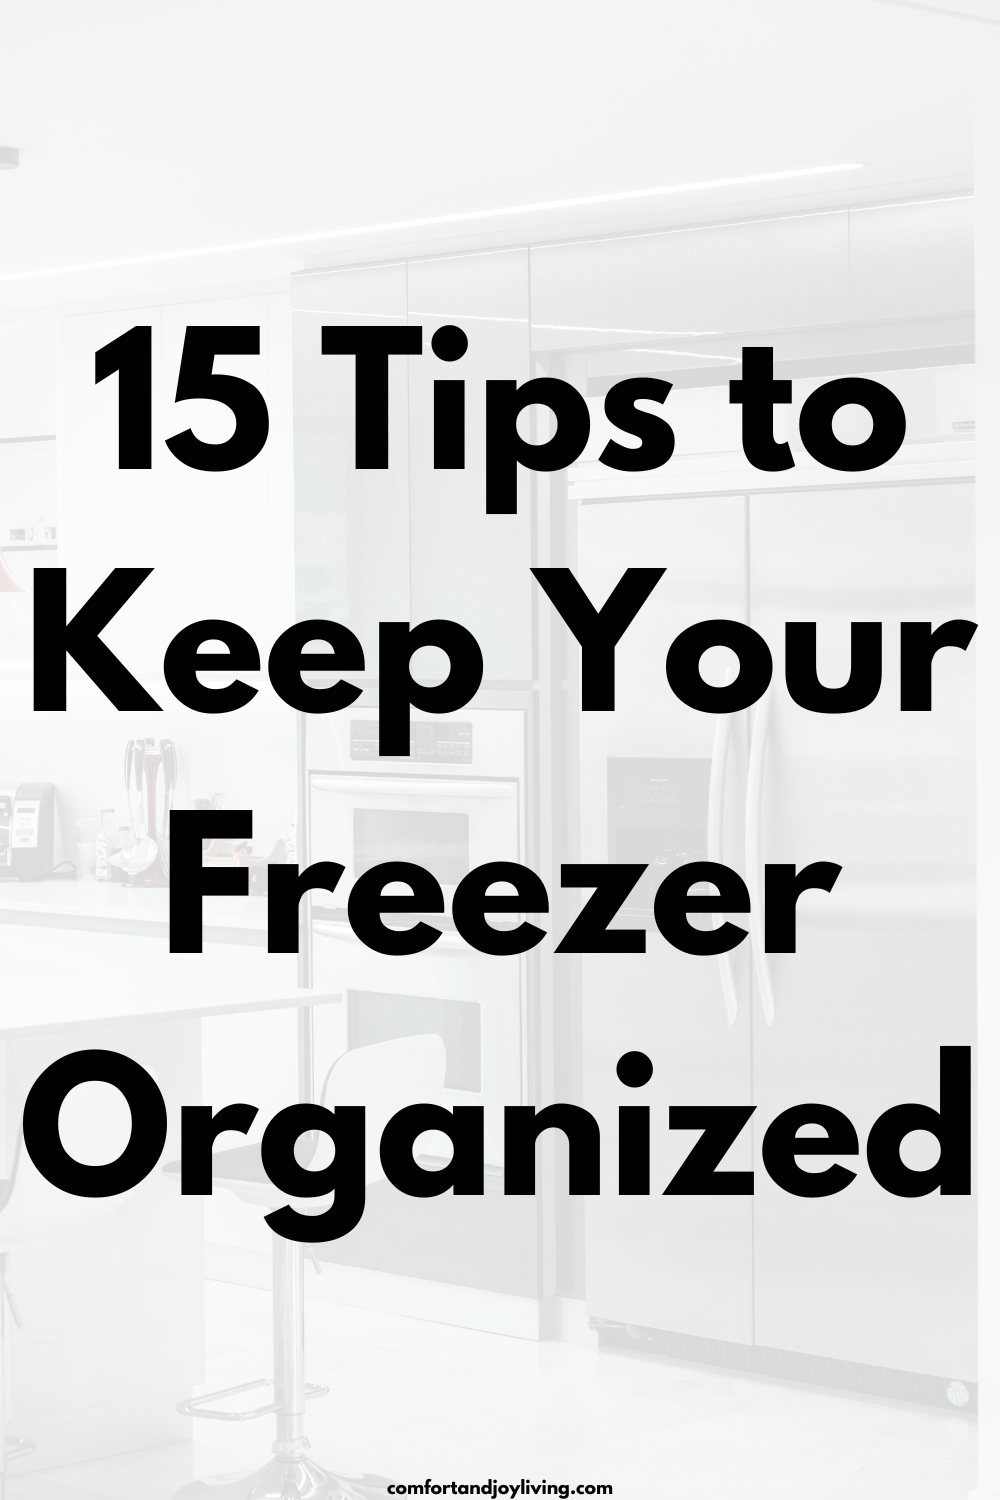 15 Tips to Keep Your Freezer Organized